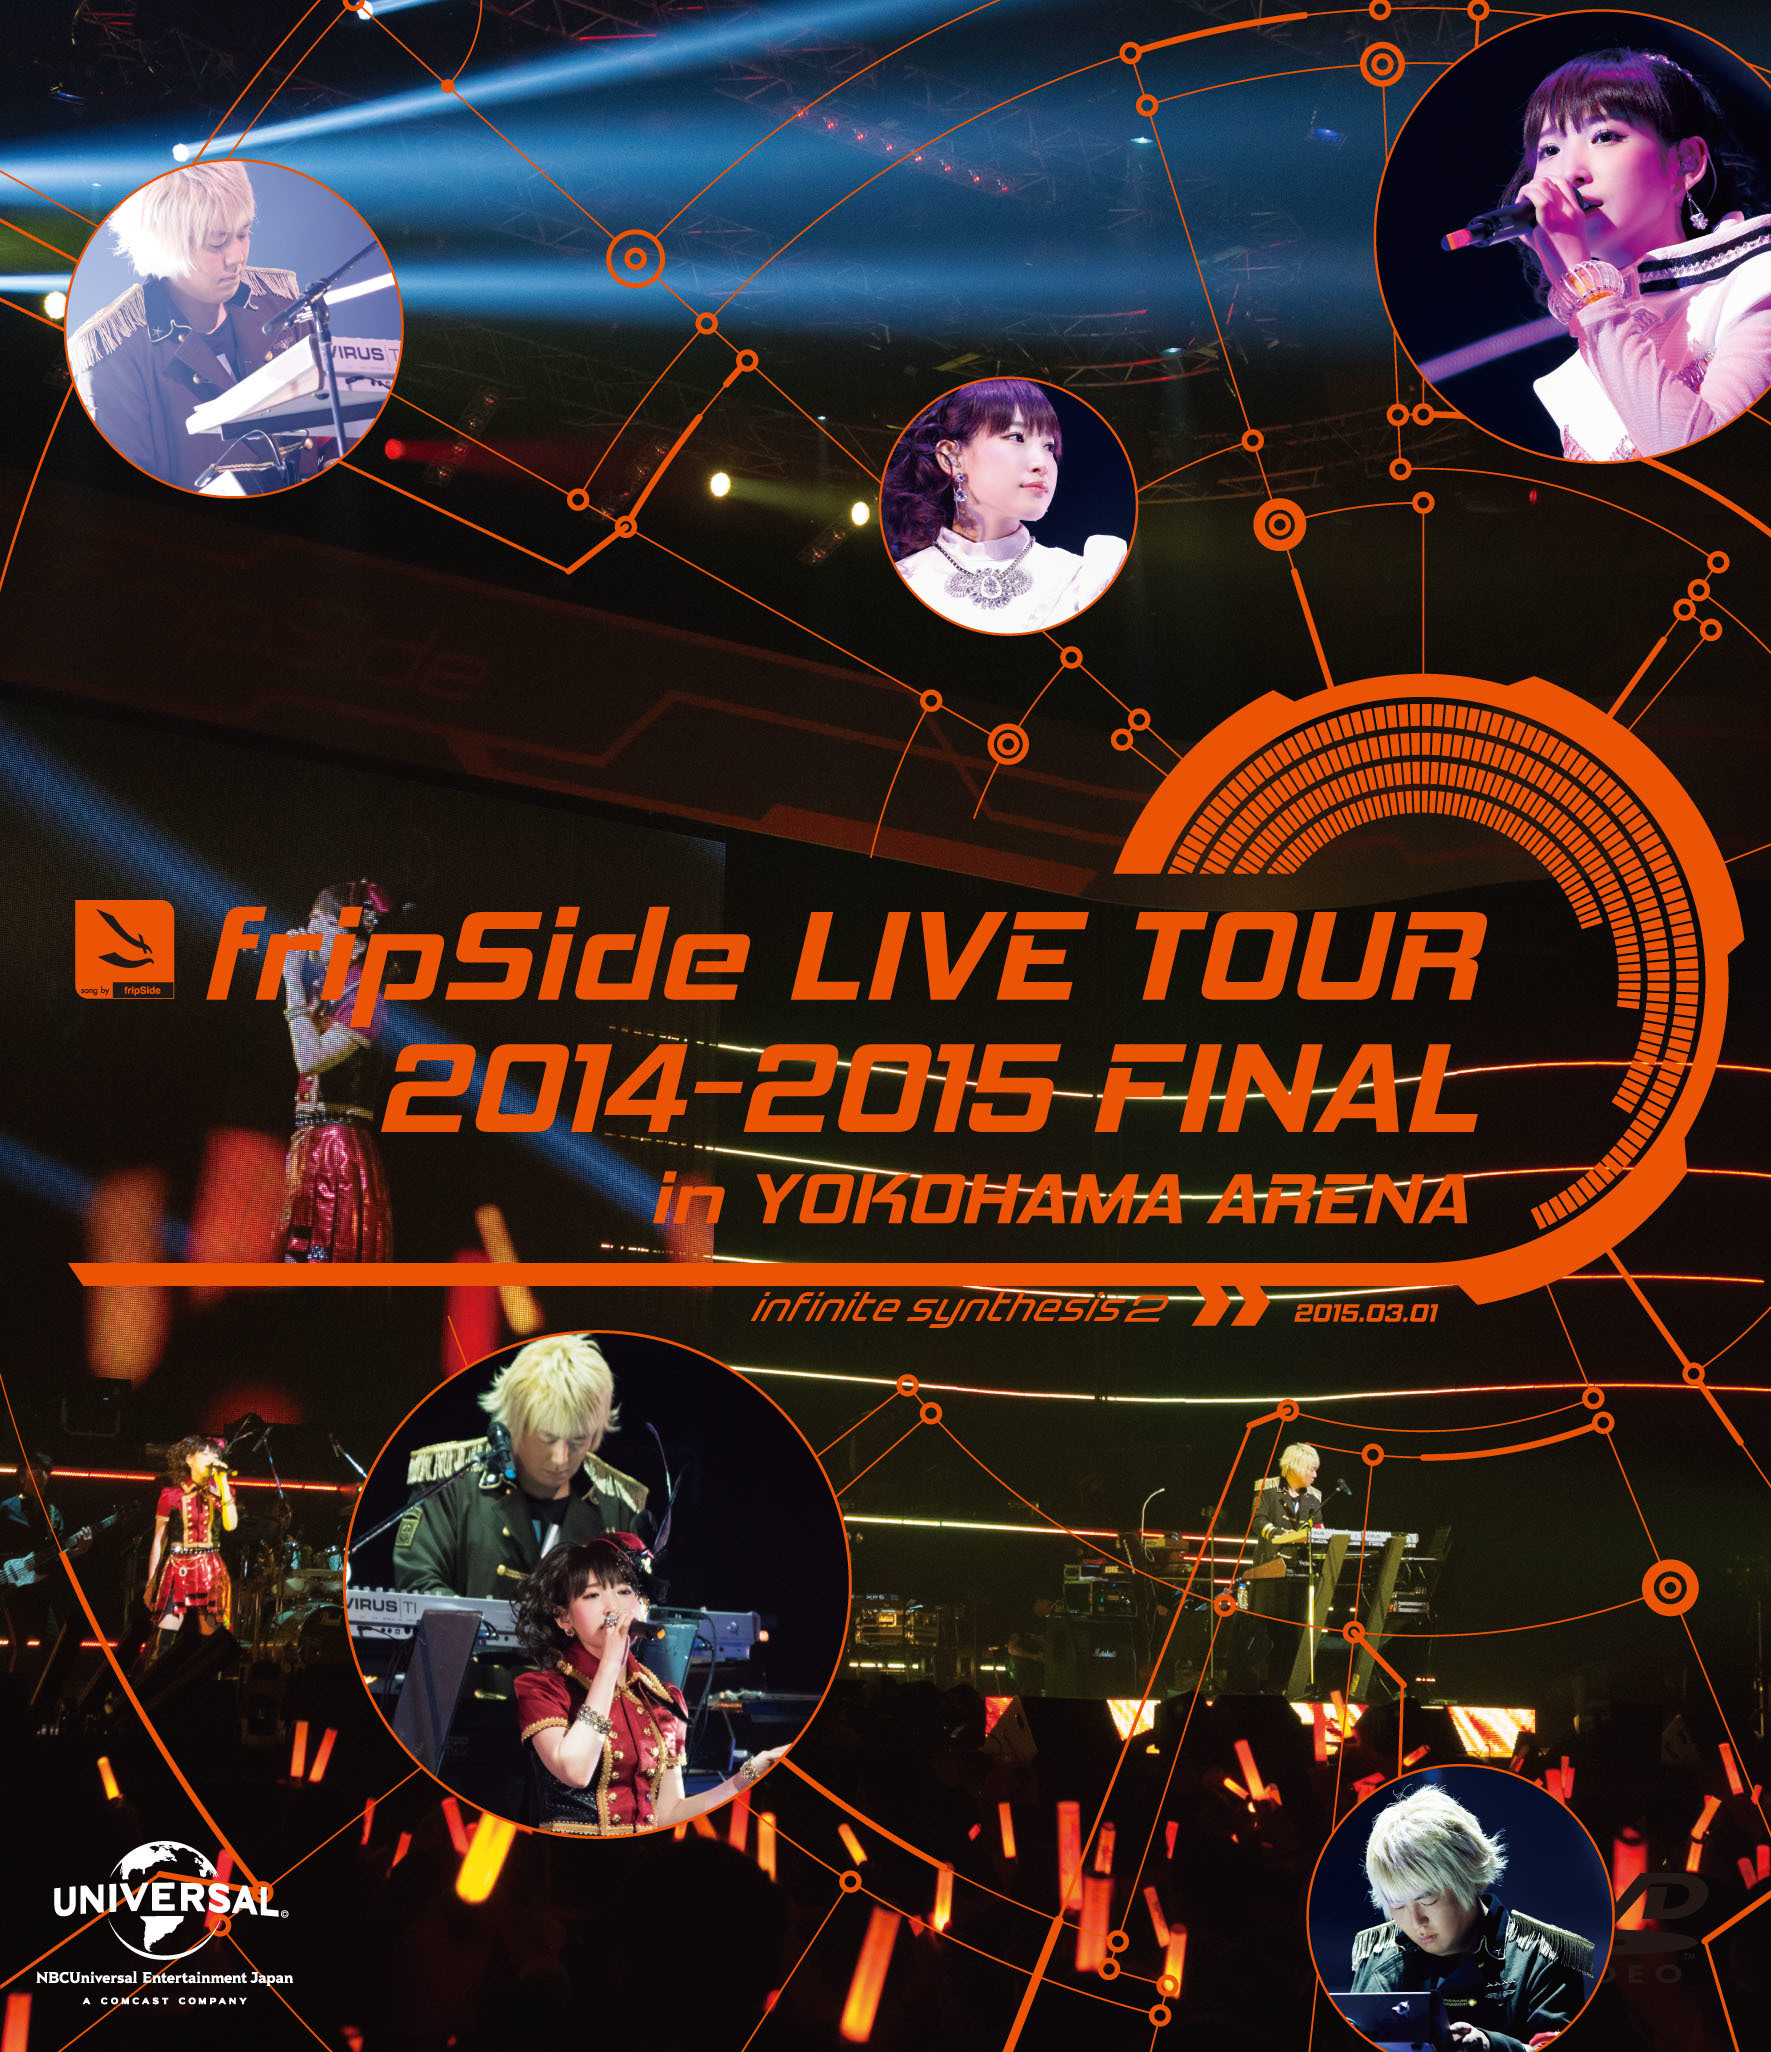 fripside live tour final in yokohama arena